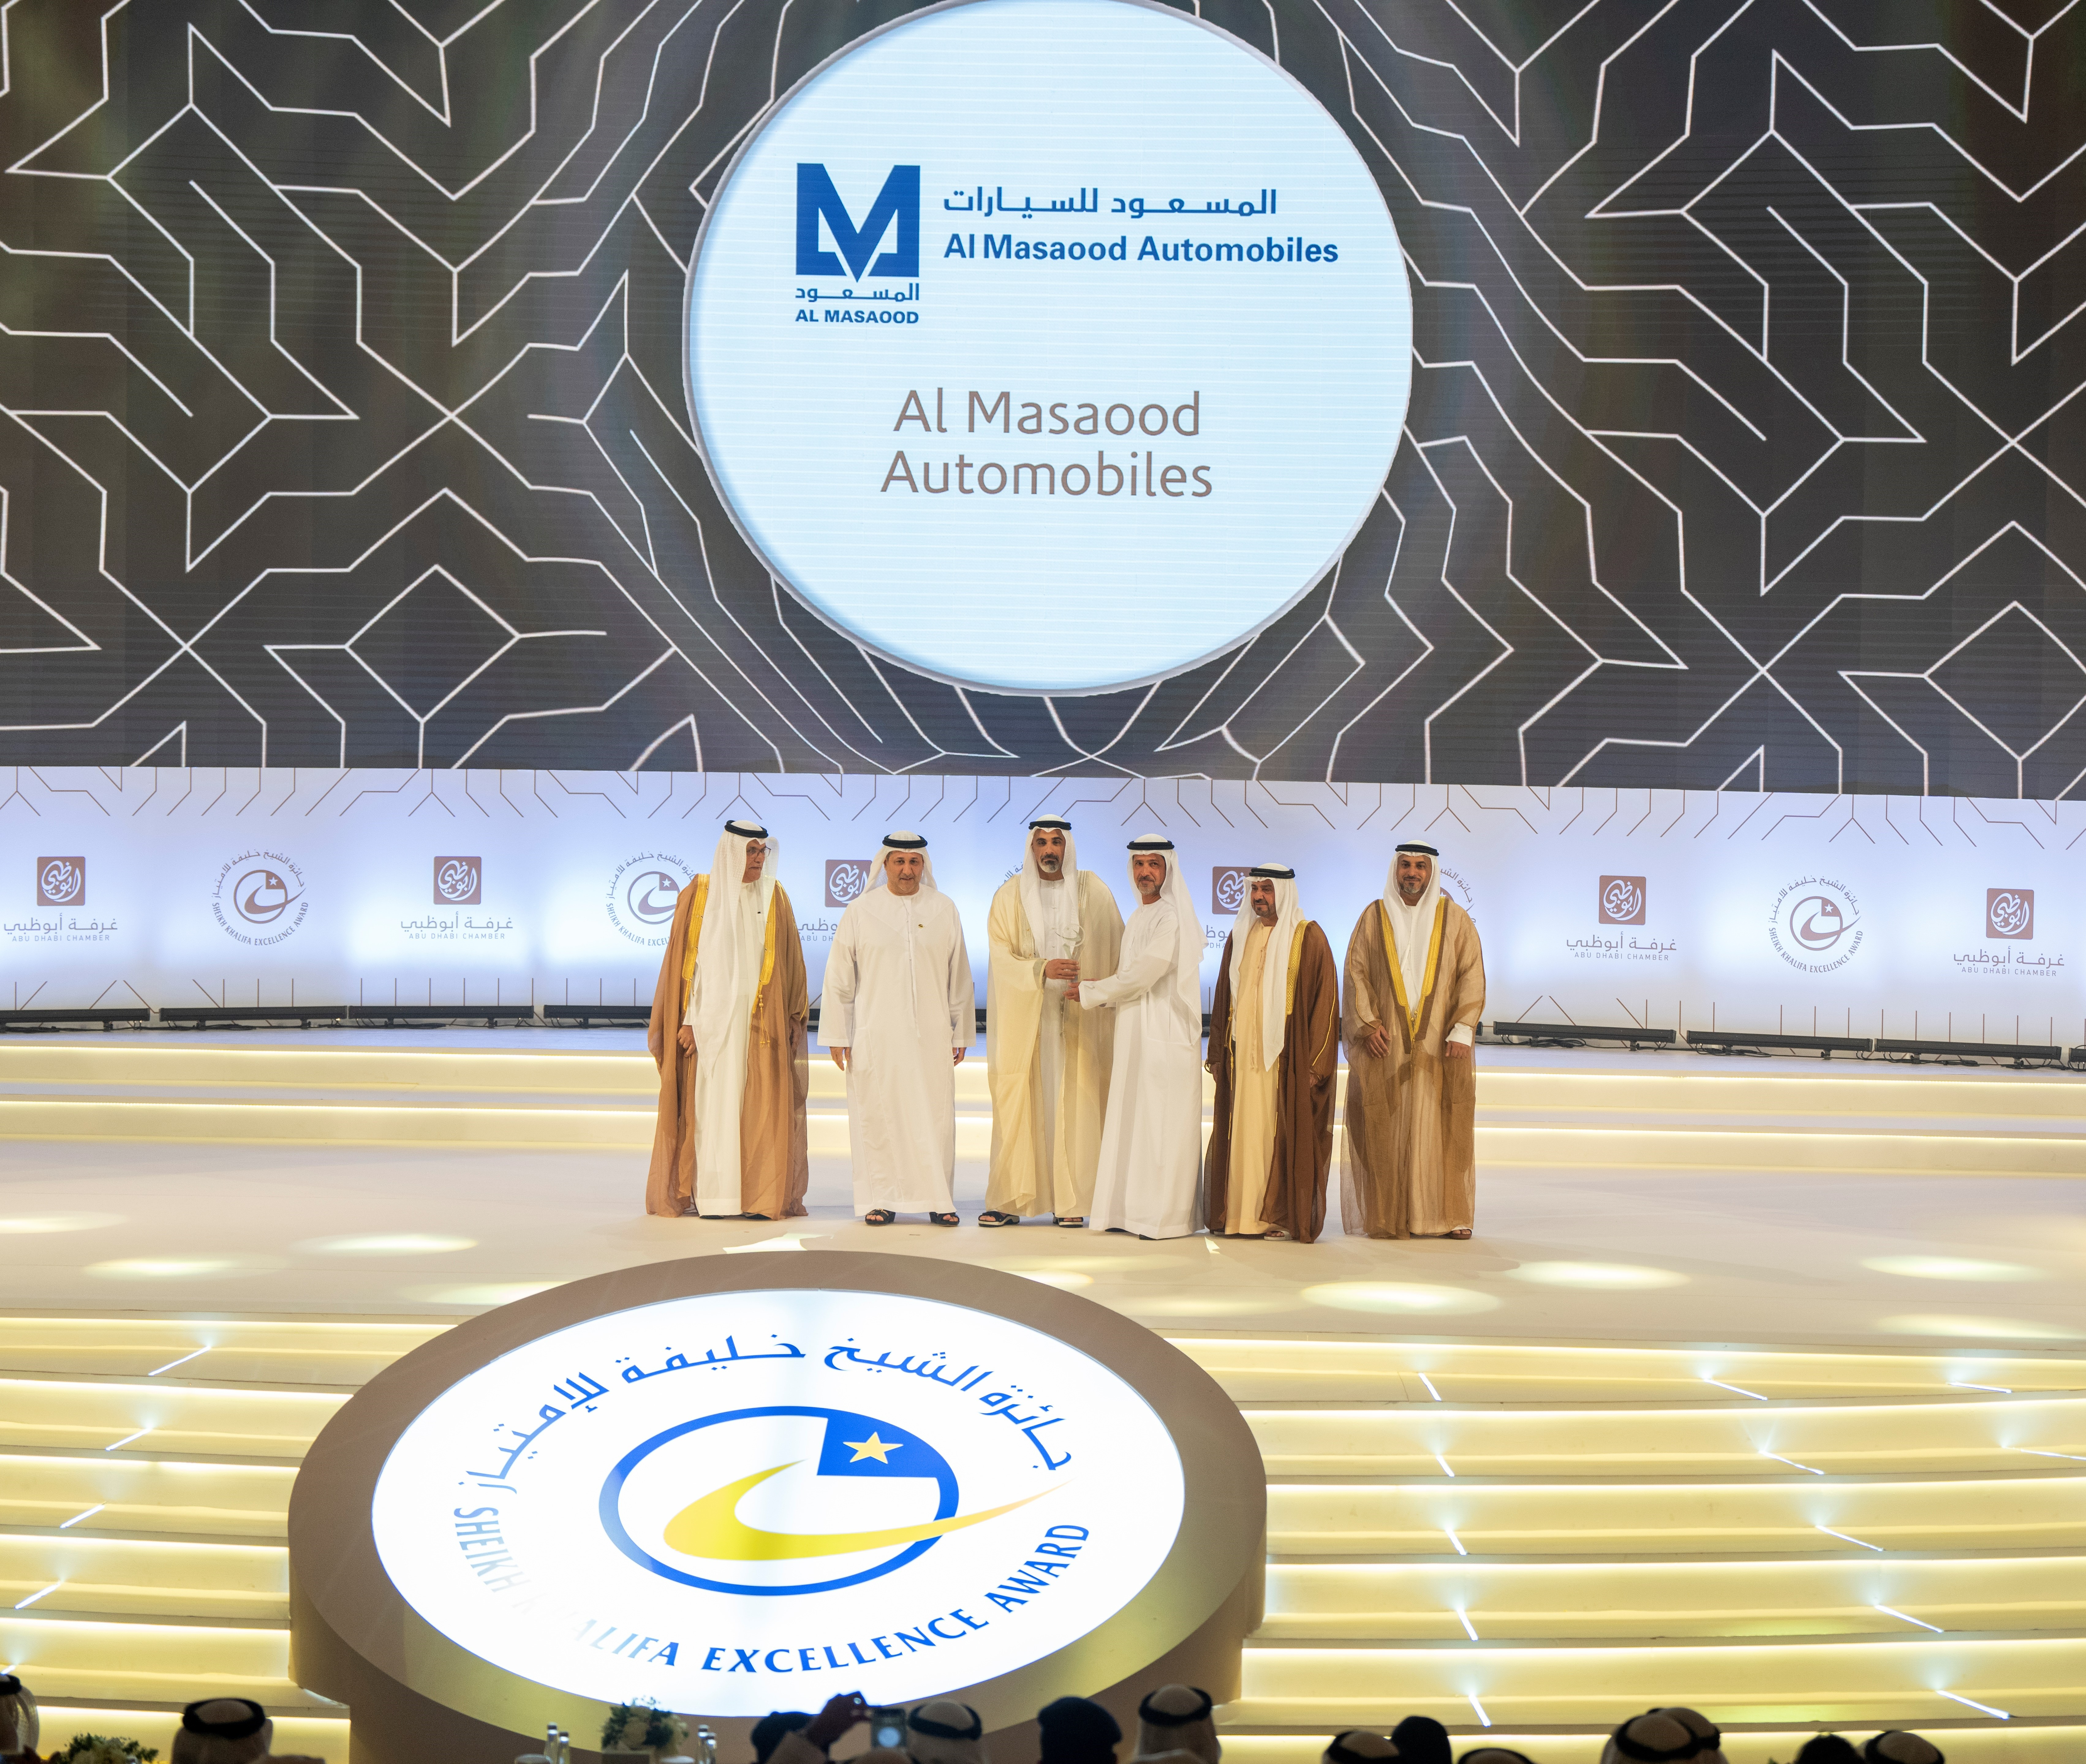   Al Masaood Automobiles Wins Prestigious Sheikh Khalifa Excellence Award on First Submission